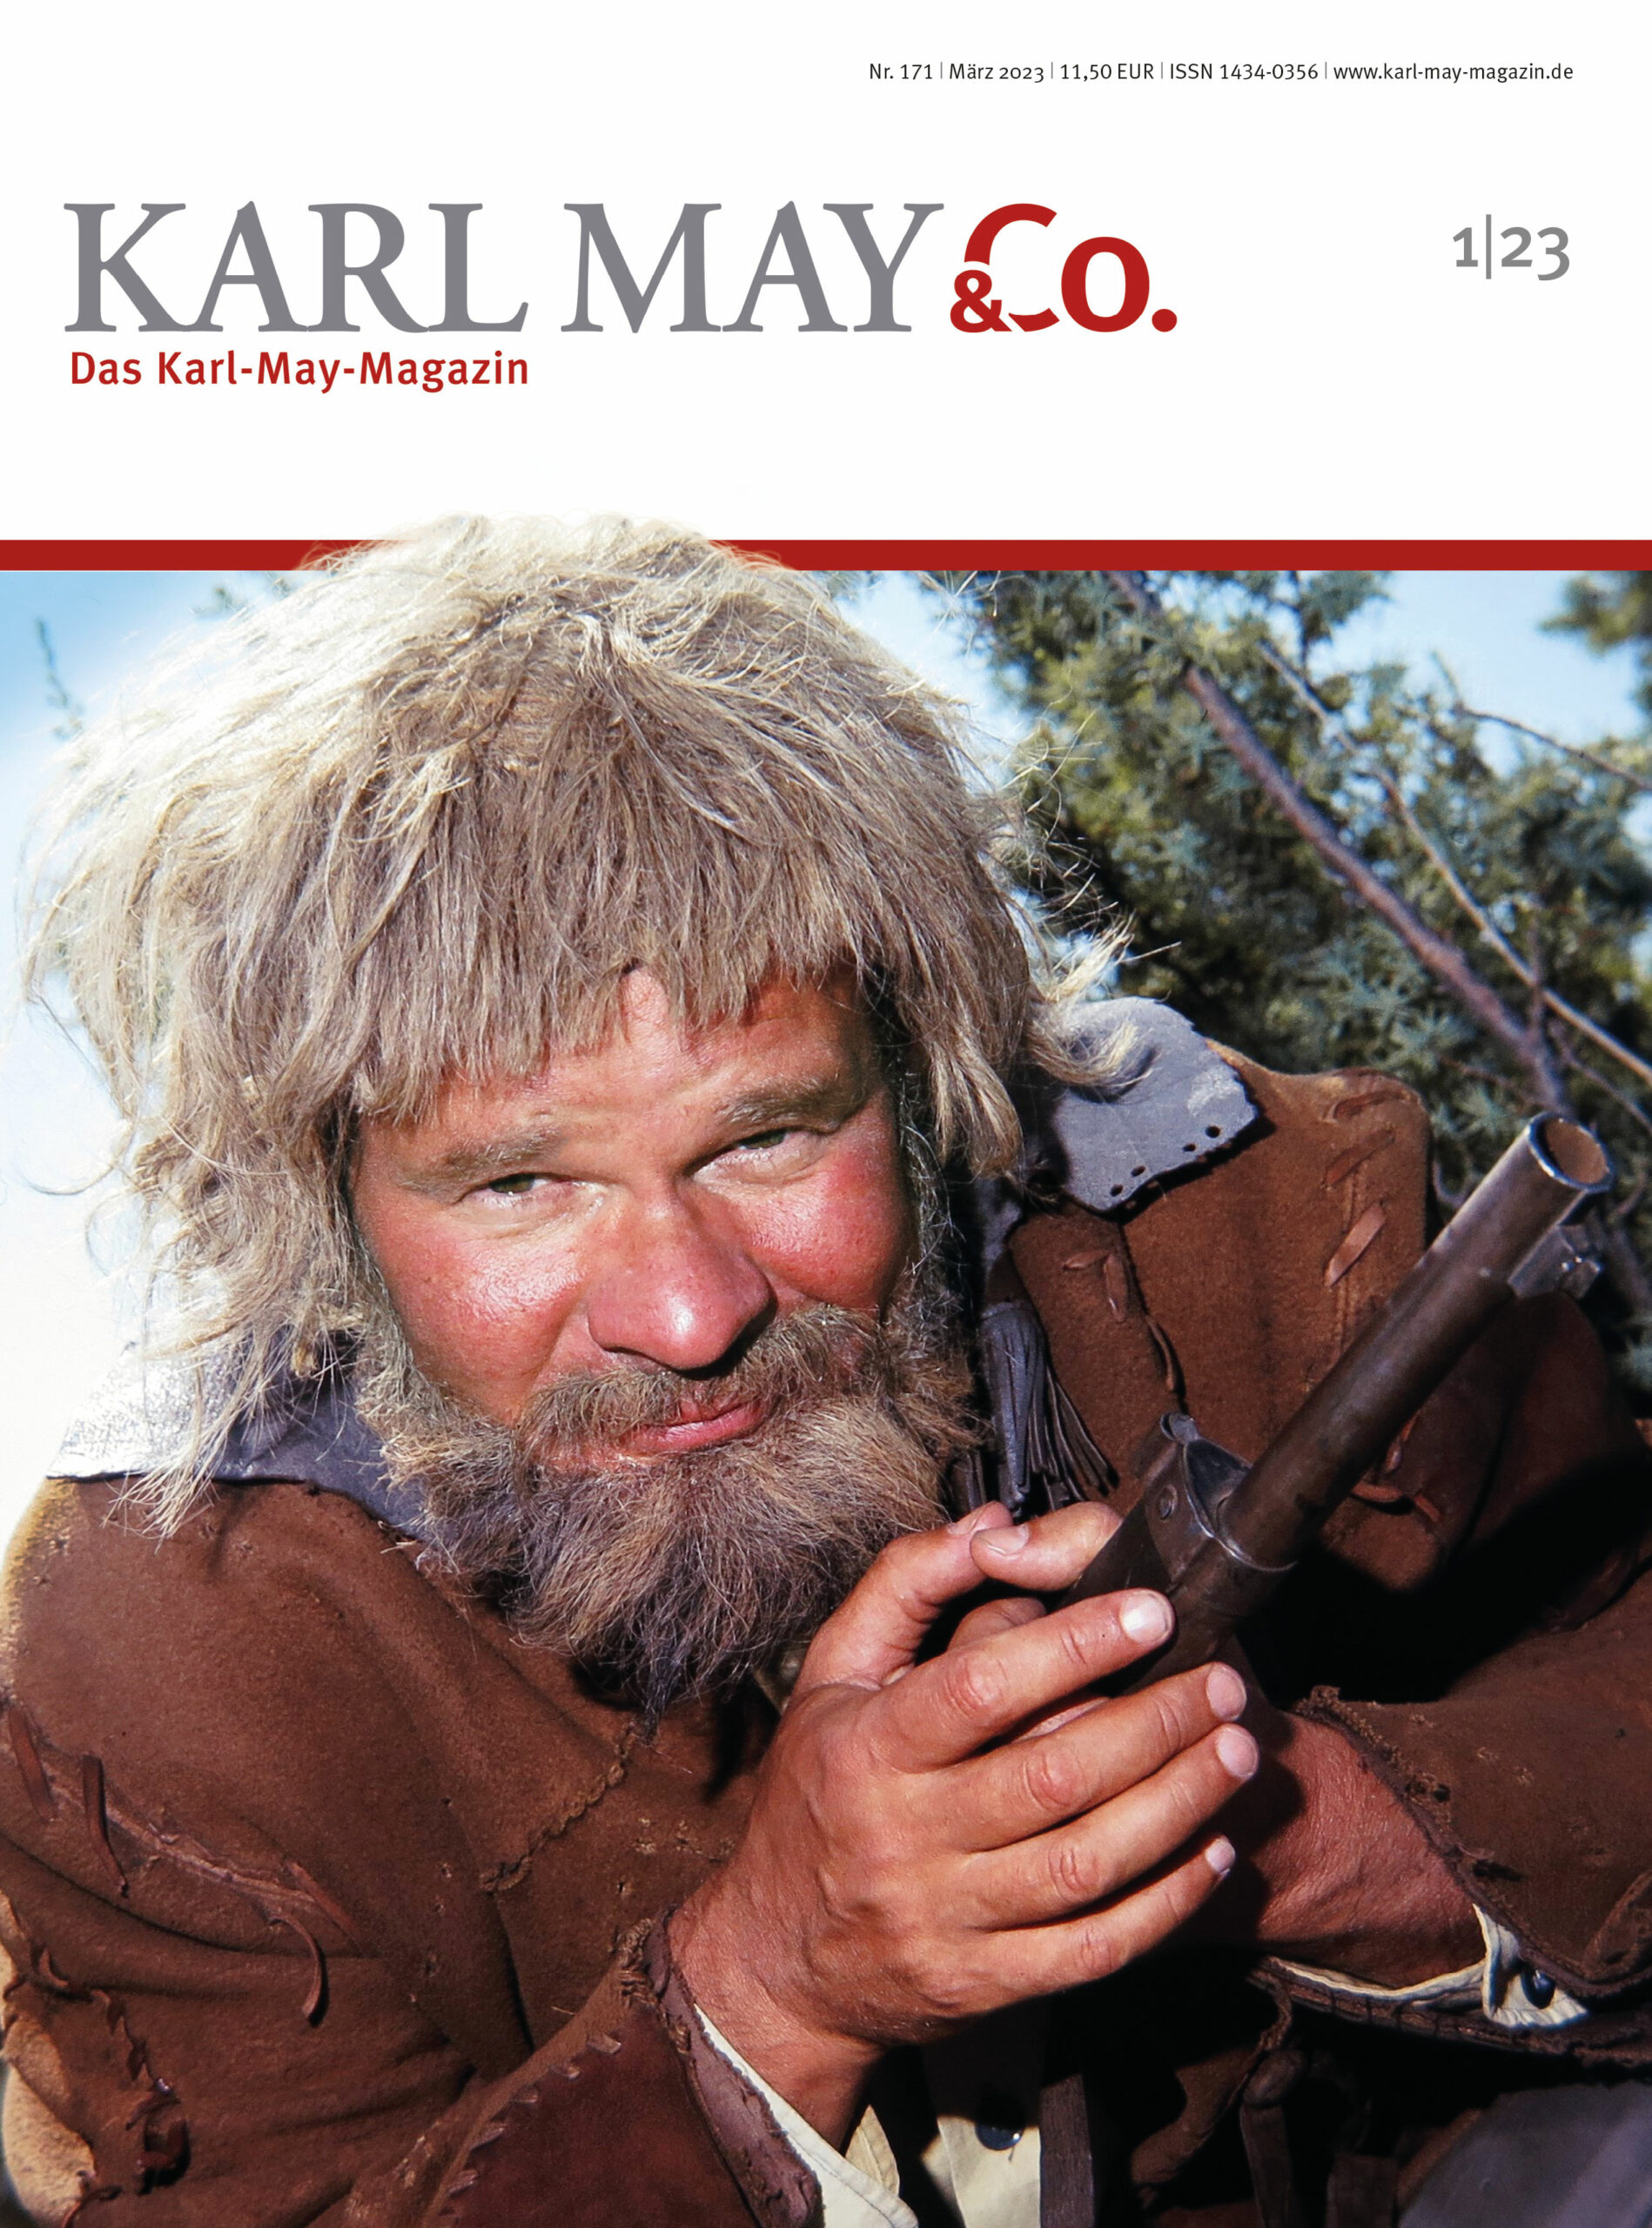 KARL MAY & Co. – die aktuelle Ausgabe